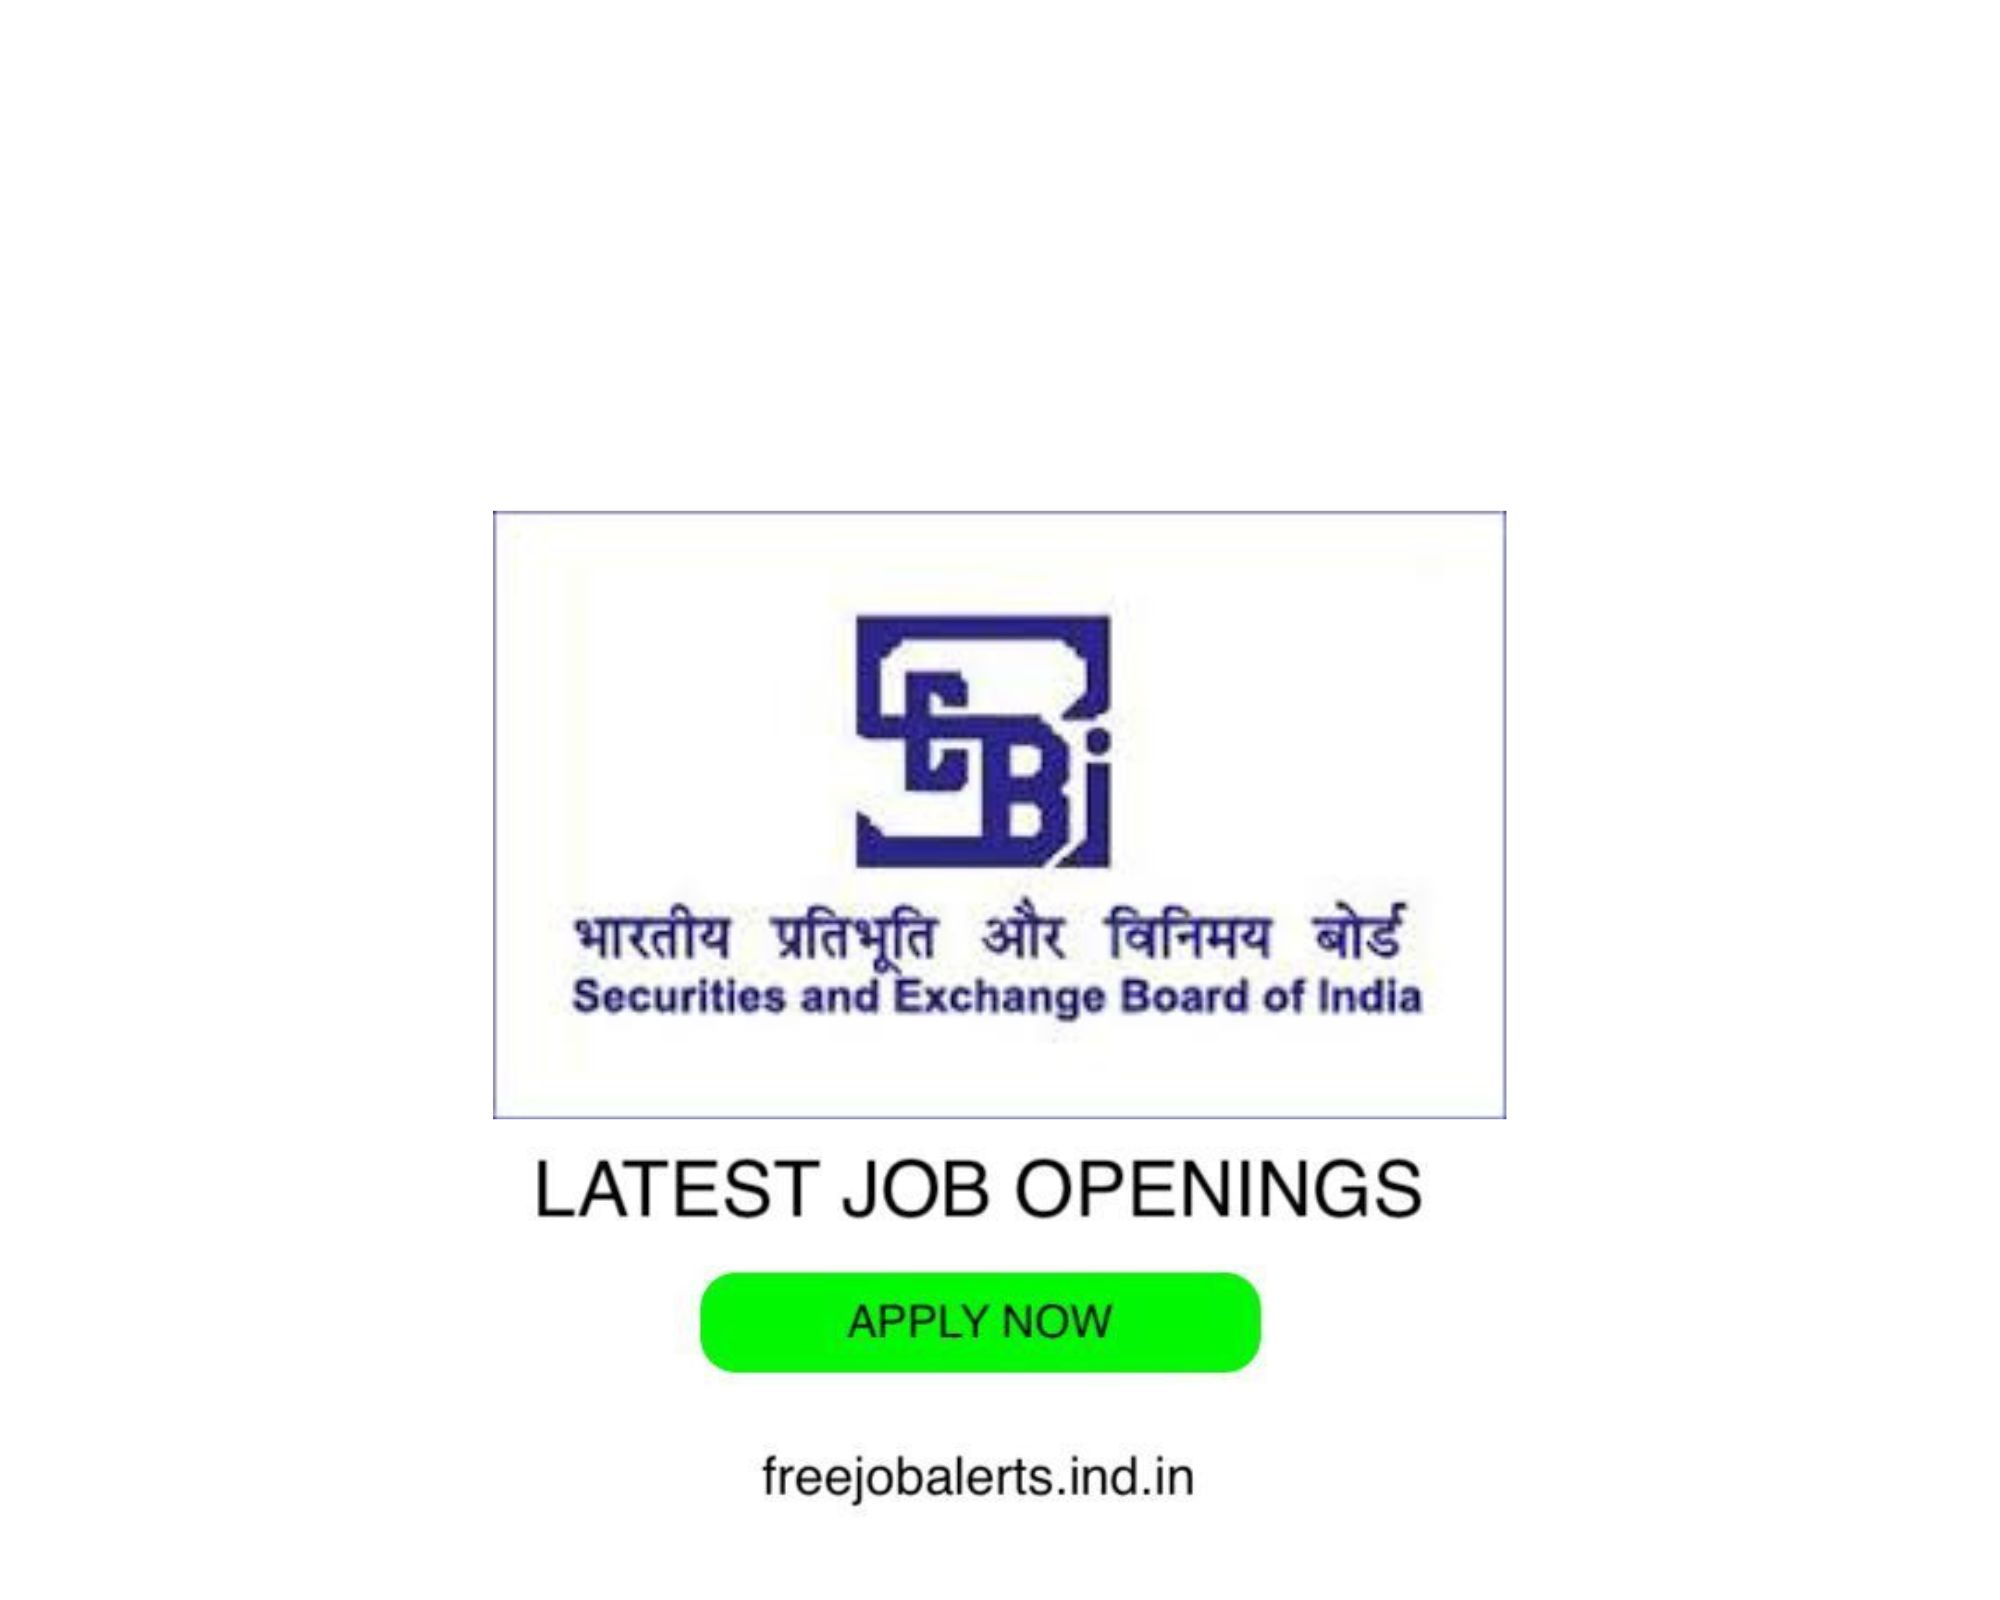 SEBI - The Securities and Exchange Board of India - Latest Govt job openings - Free job alerts, Indian Govt Jobs